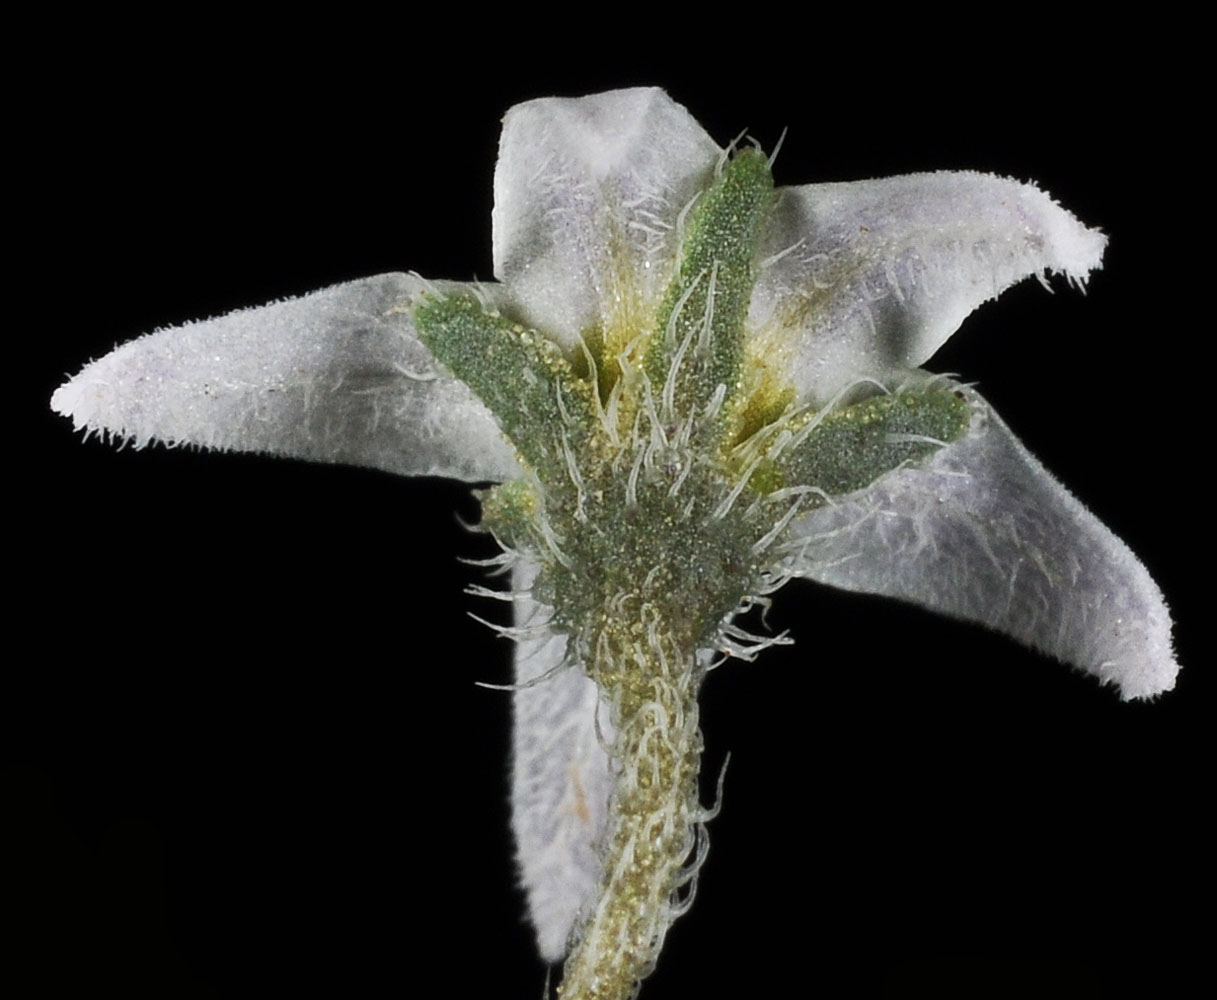 Flora of Eastern Washington Image: Solanum triflorum